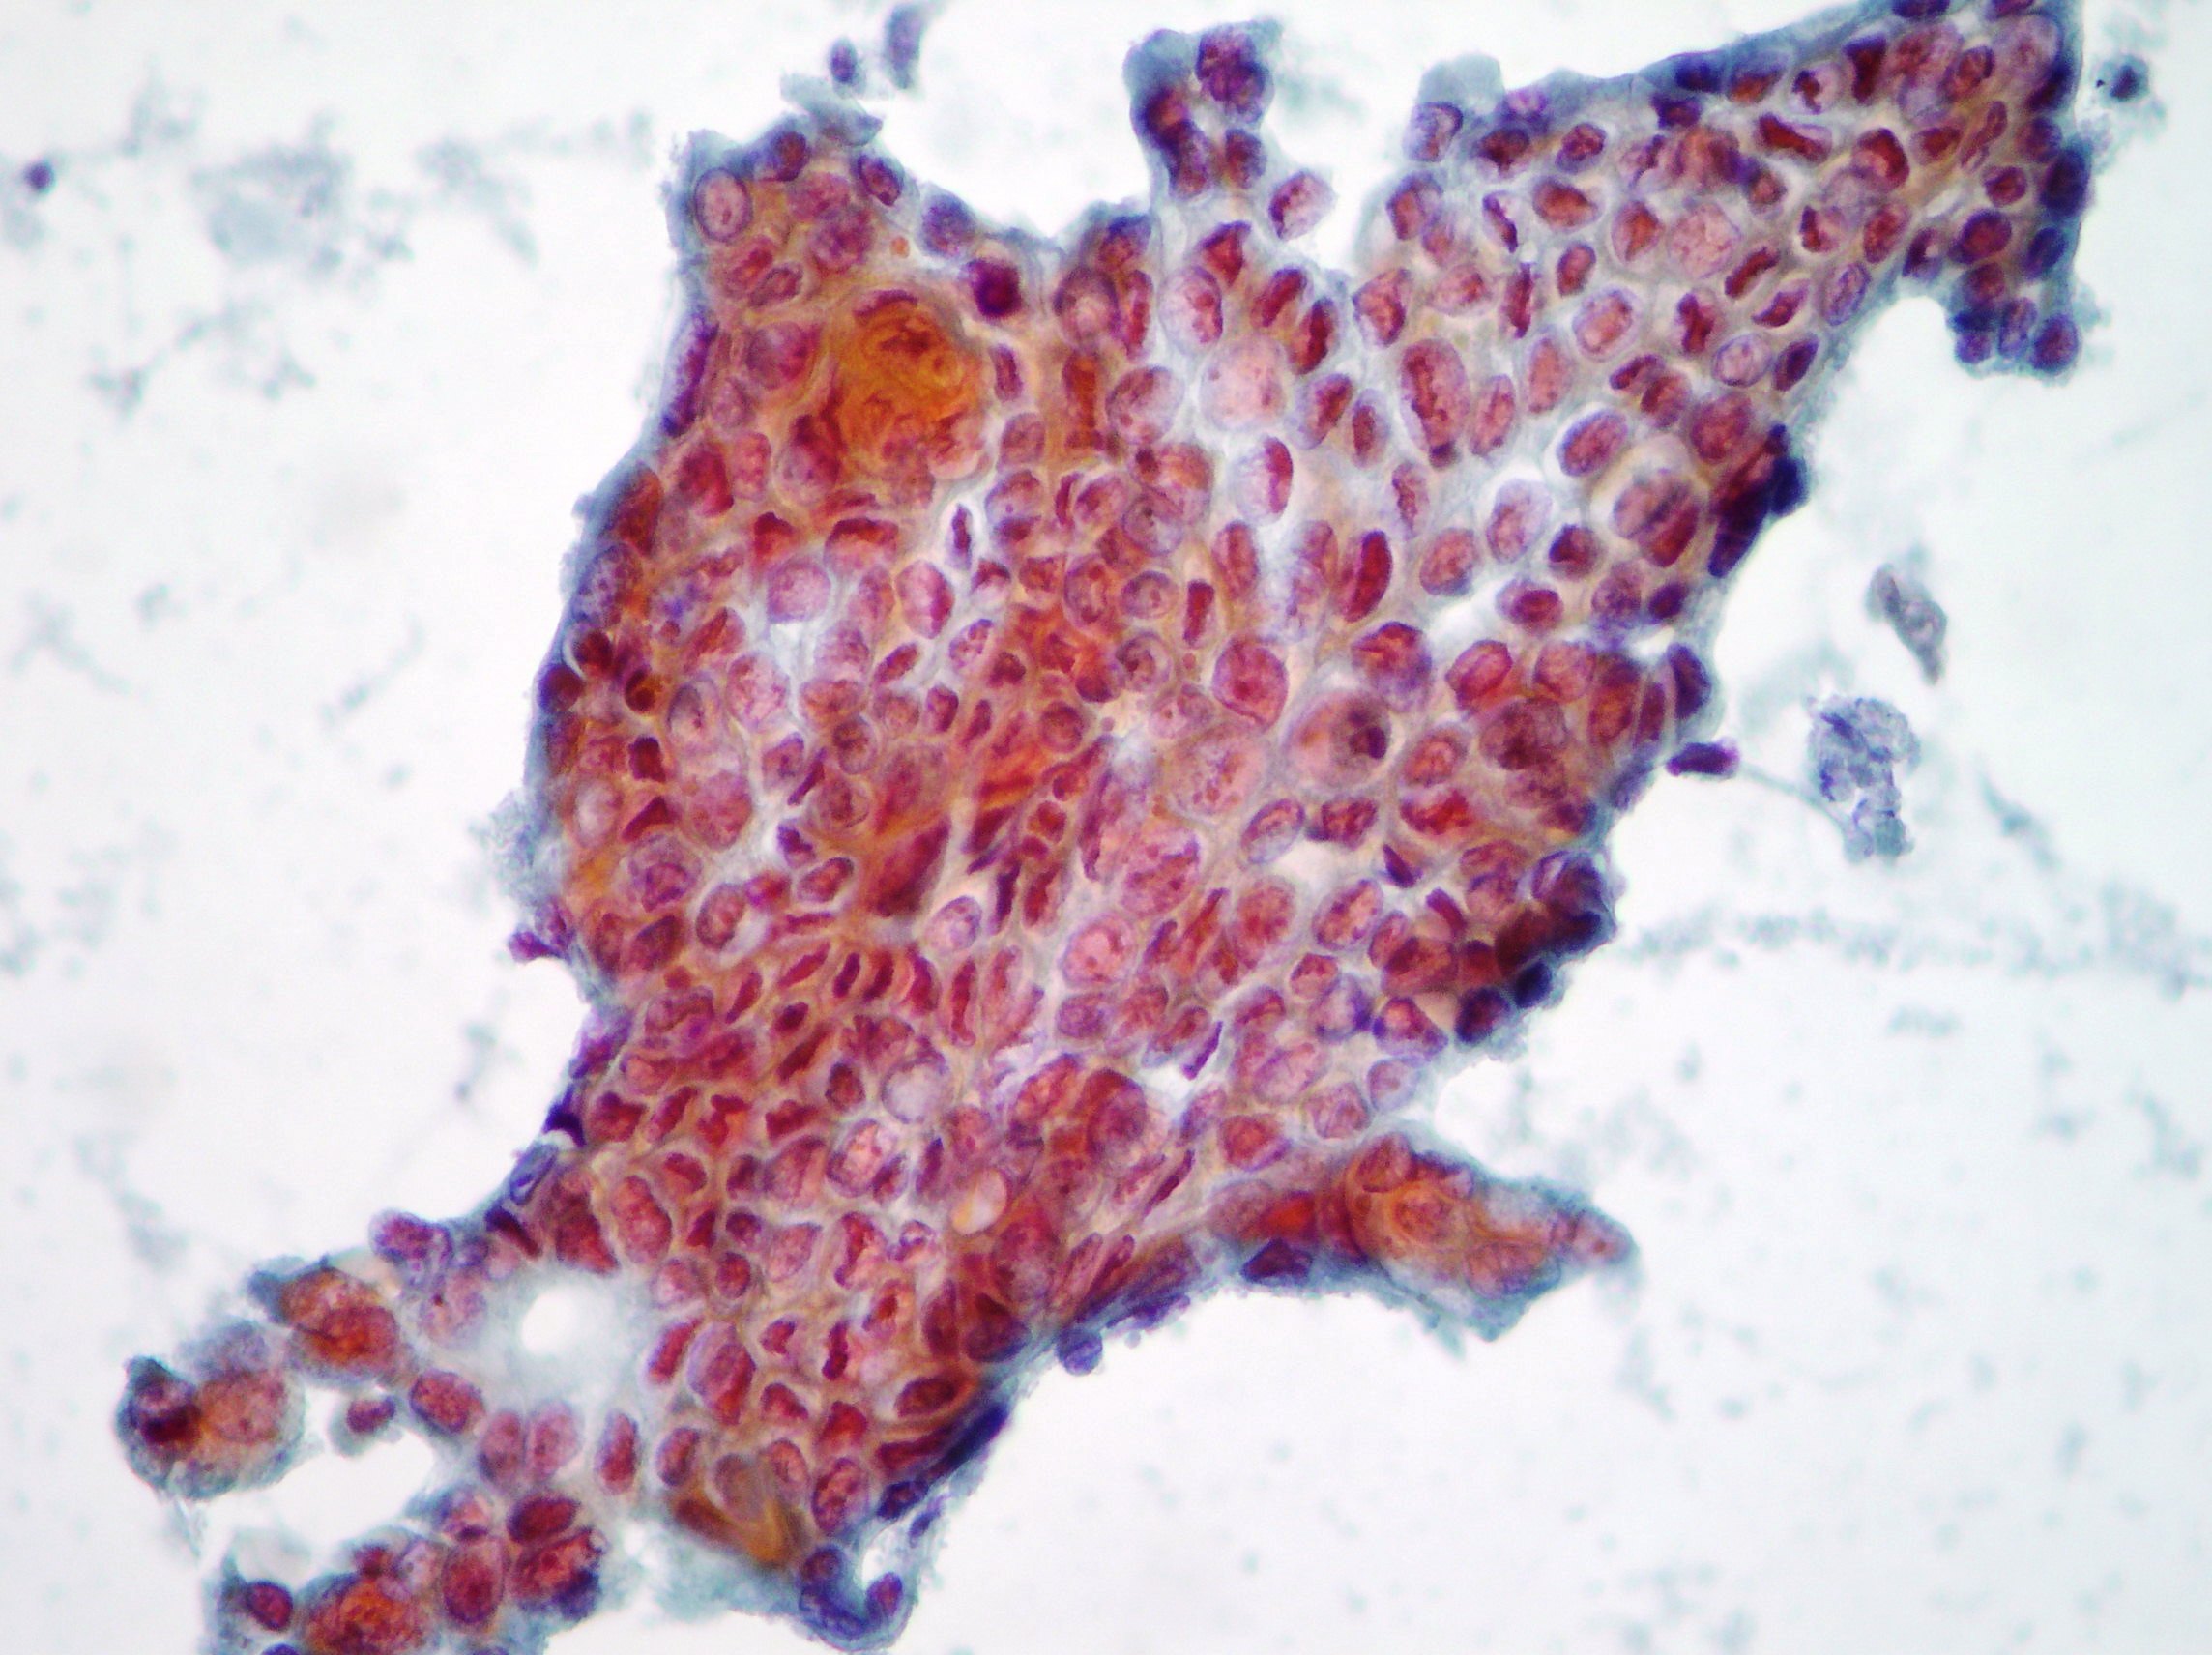 Pancreatic adenocarcinoma